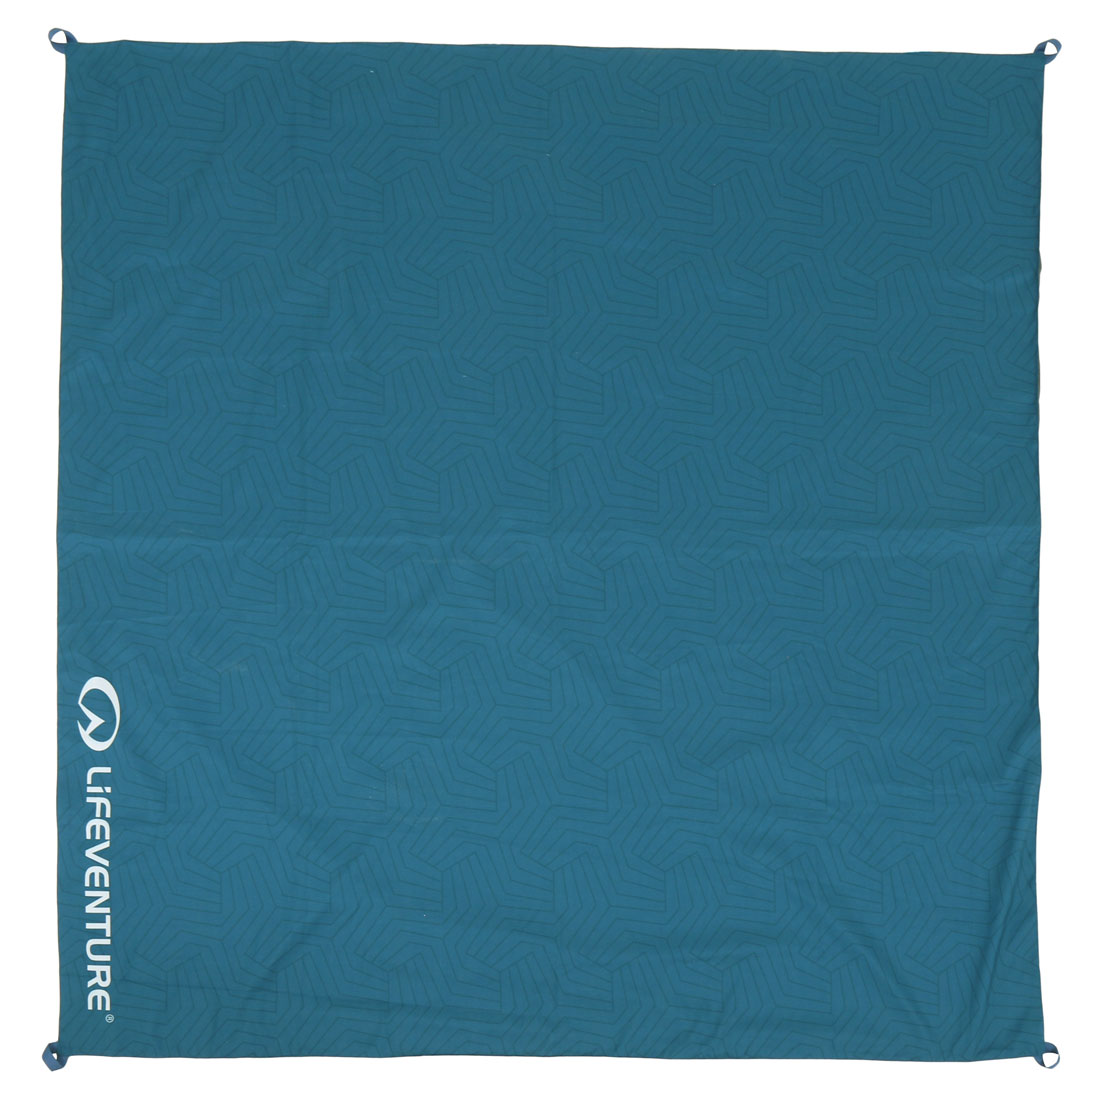 Picnic Blanket - variant[Geometric Teal]